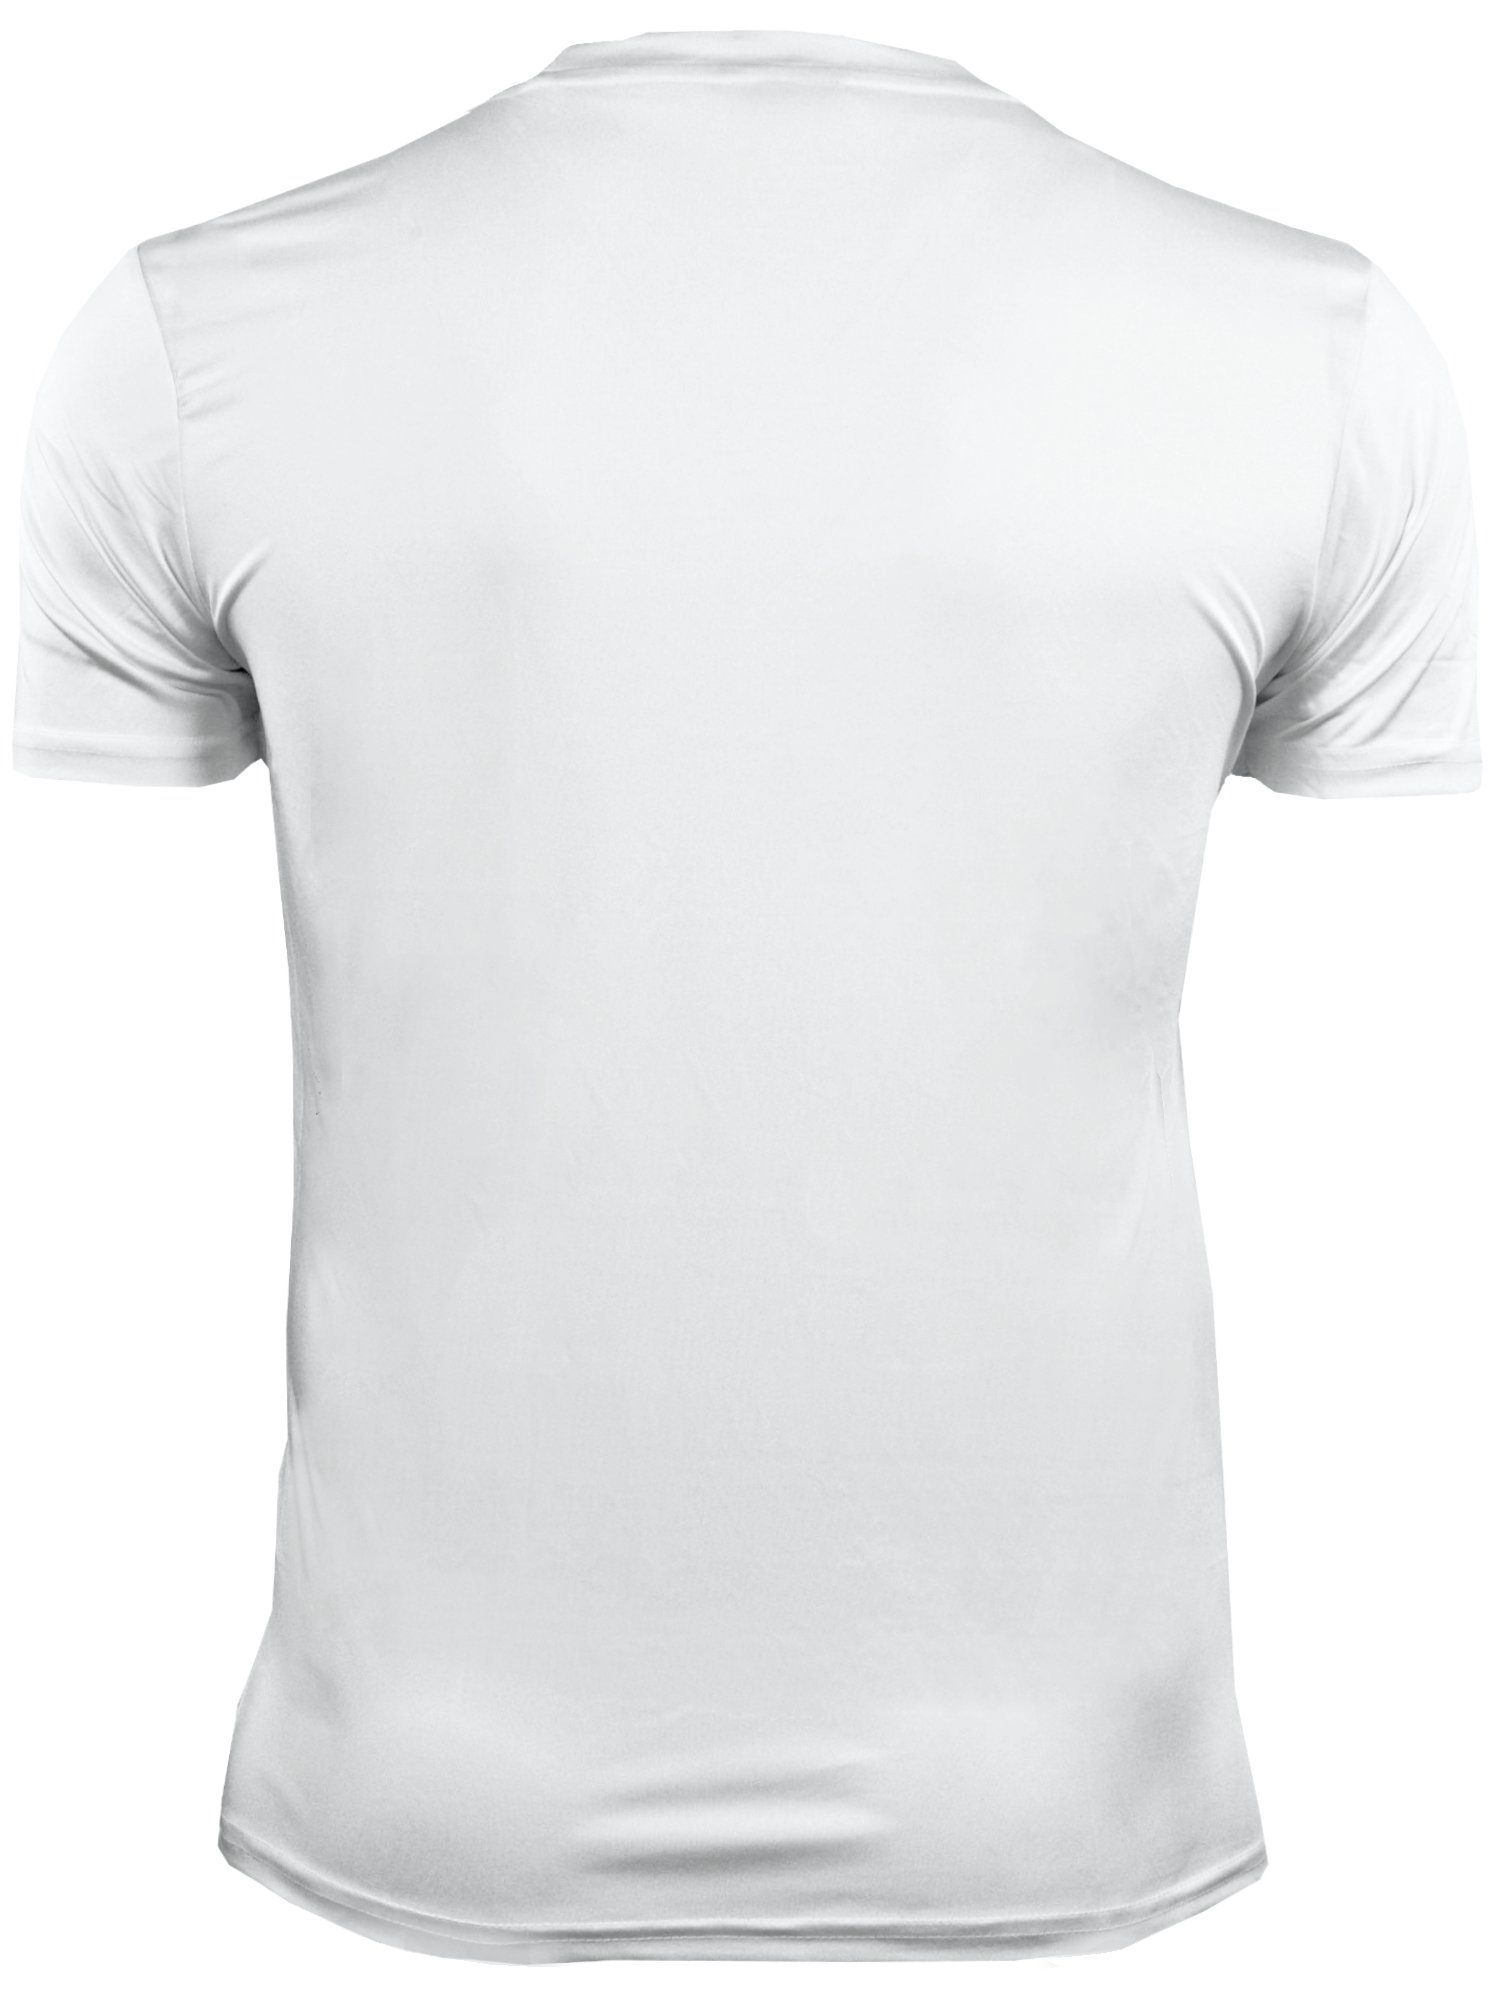 T-Shirt Kurzarm Herren Funktionsshirt FW04 Sportshirt Weiss-OHNE-Logo GUGGEN in Logo Mountain Funktionsshirt Unifarben,